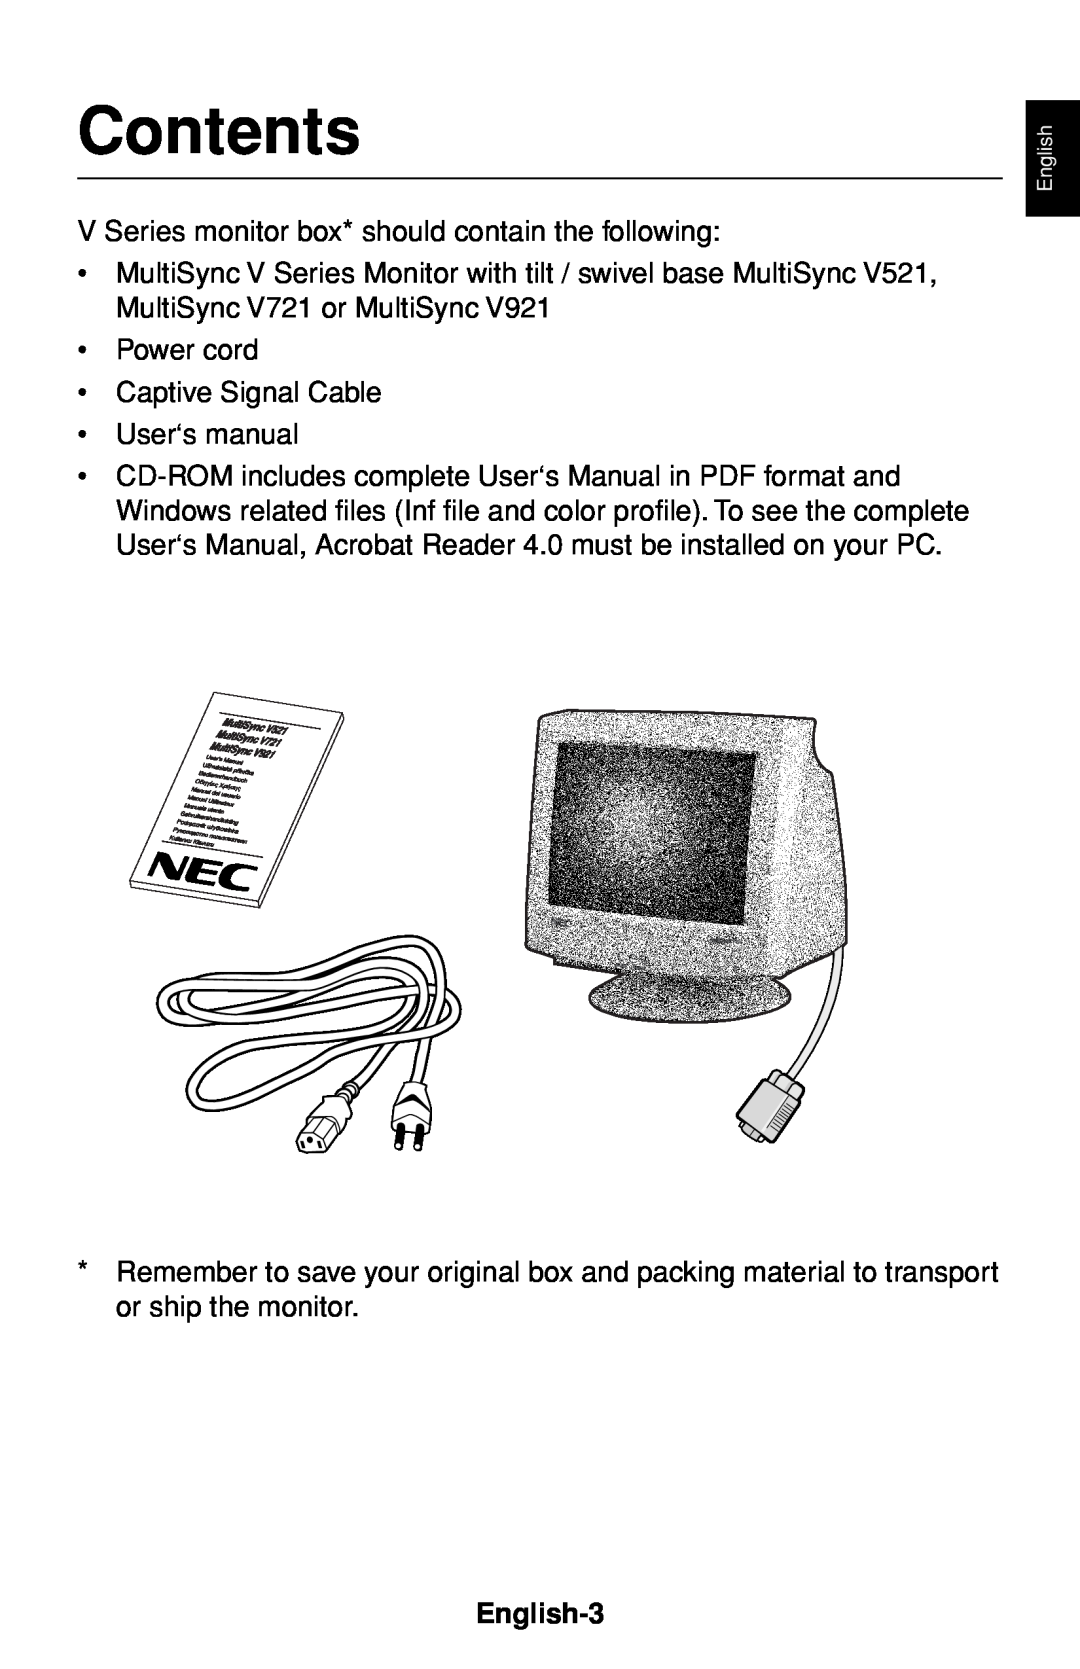 NEC 60000531 user manual Contents, English-3 